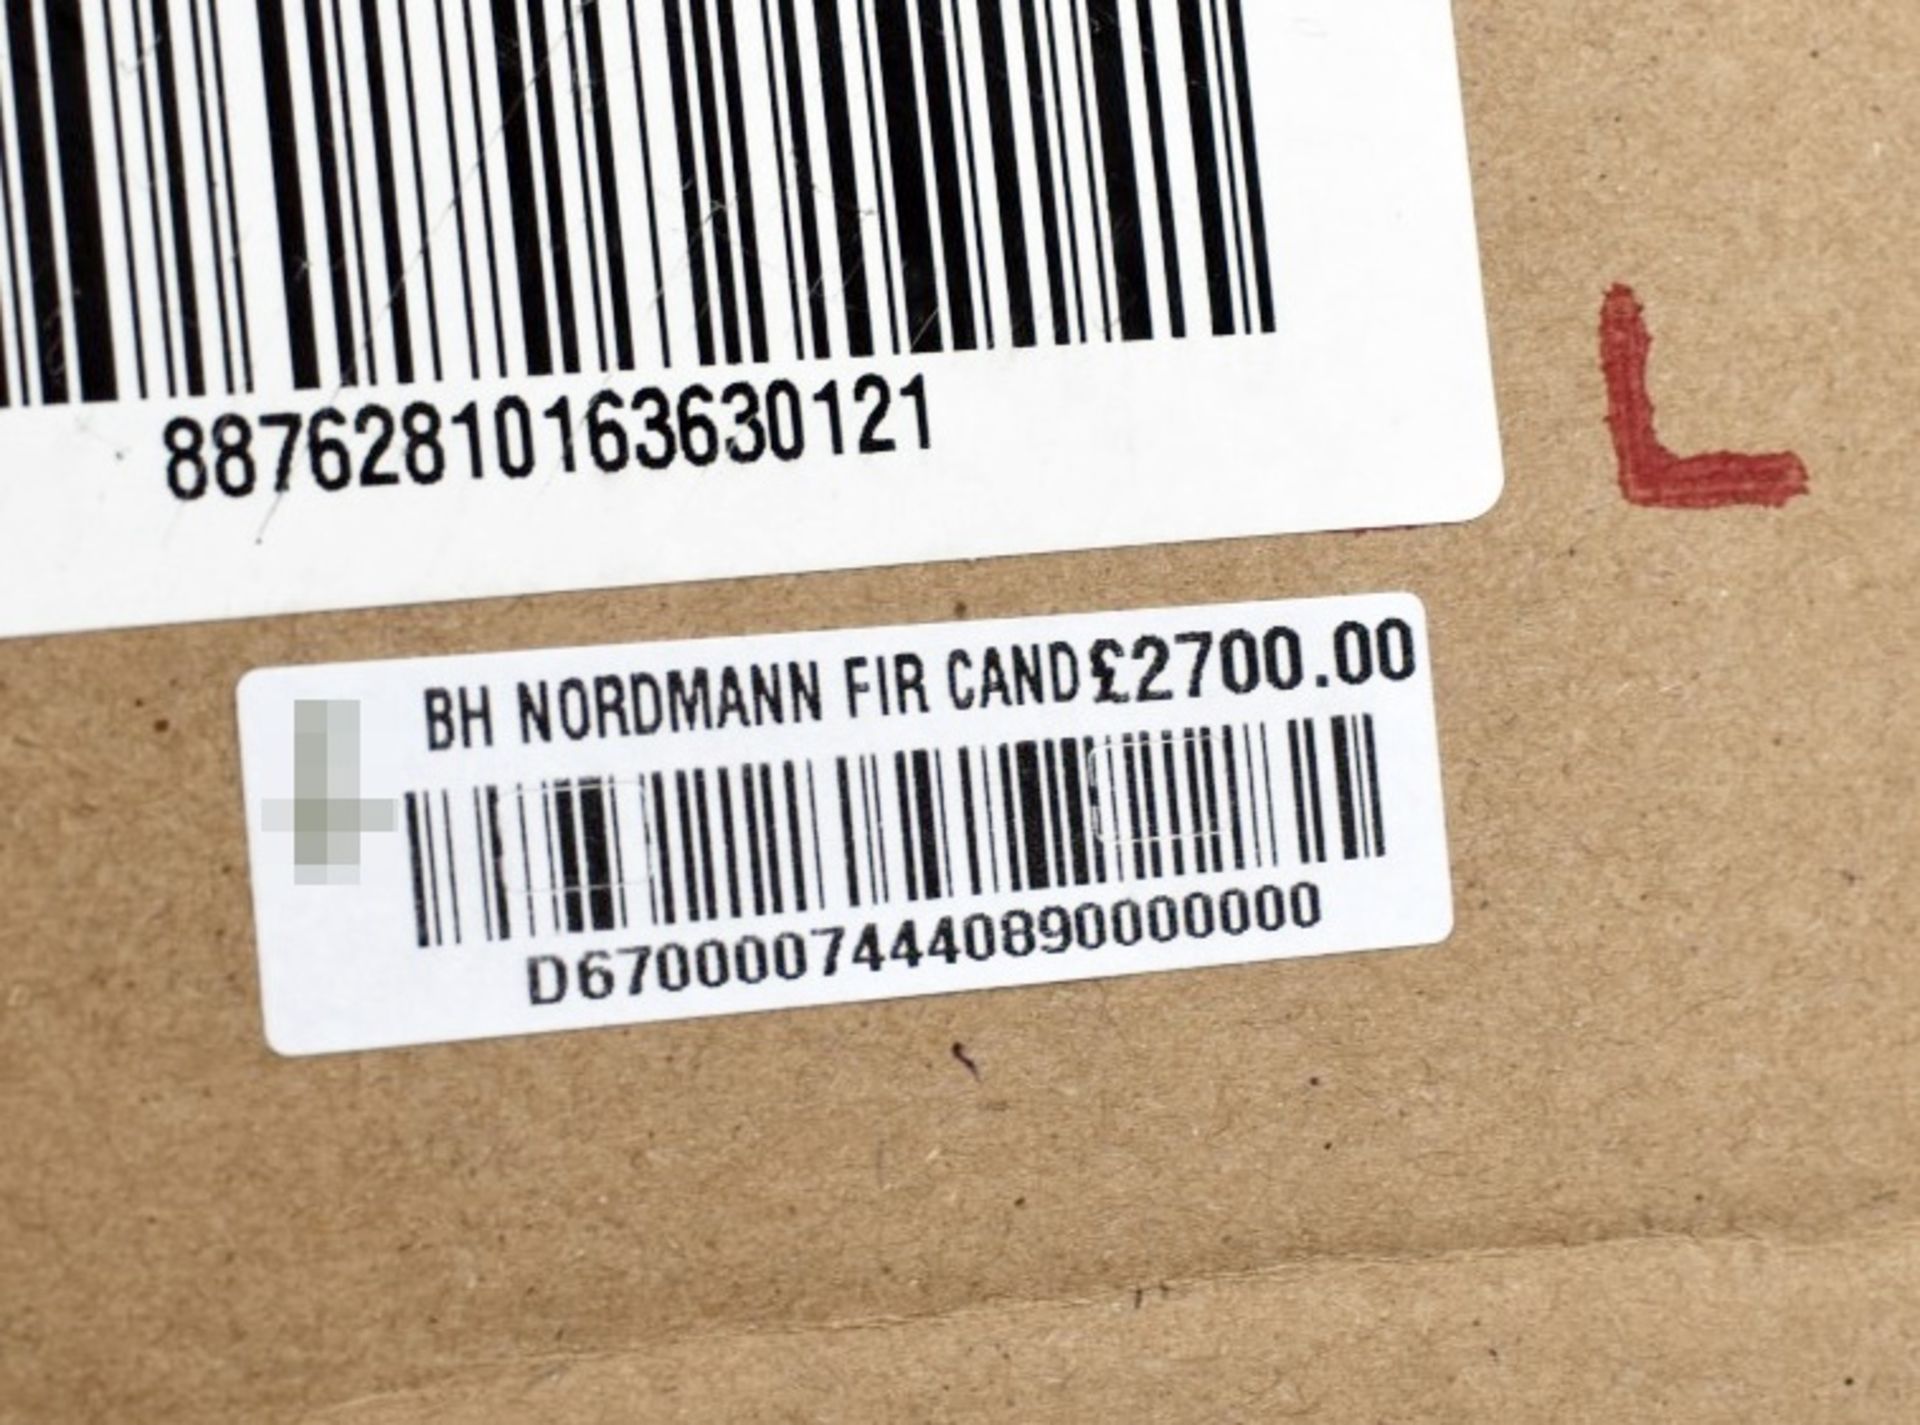 1 x BALSAM HILL 'Nordmann Fir' Luxury 12ft Candlelight Christmas Tree - Original Price £2,700 - Image 6 of 21